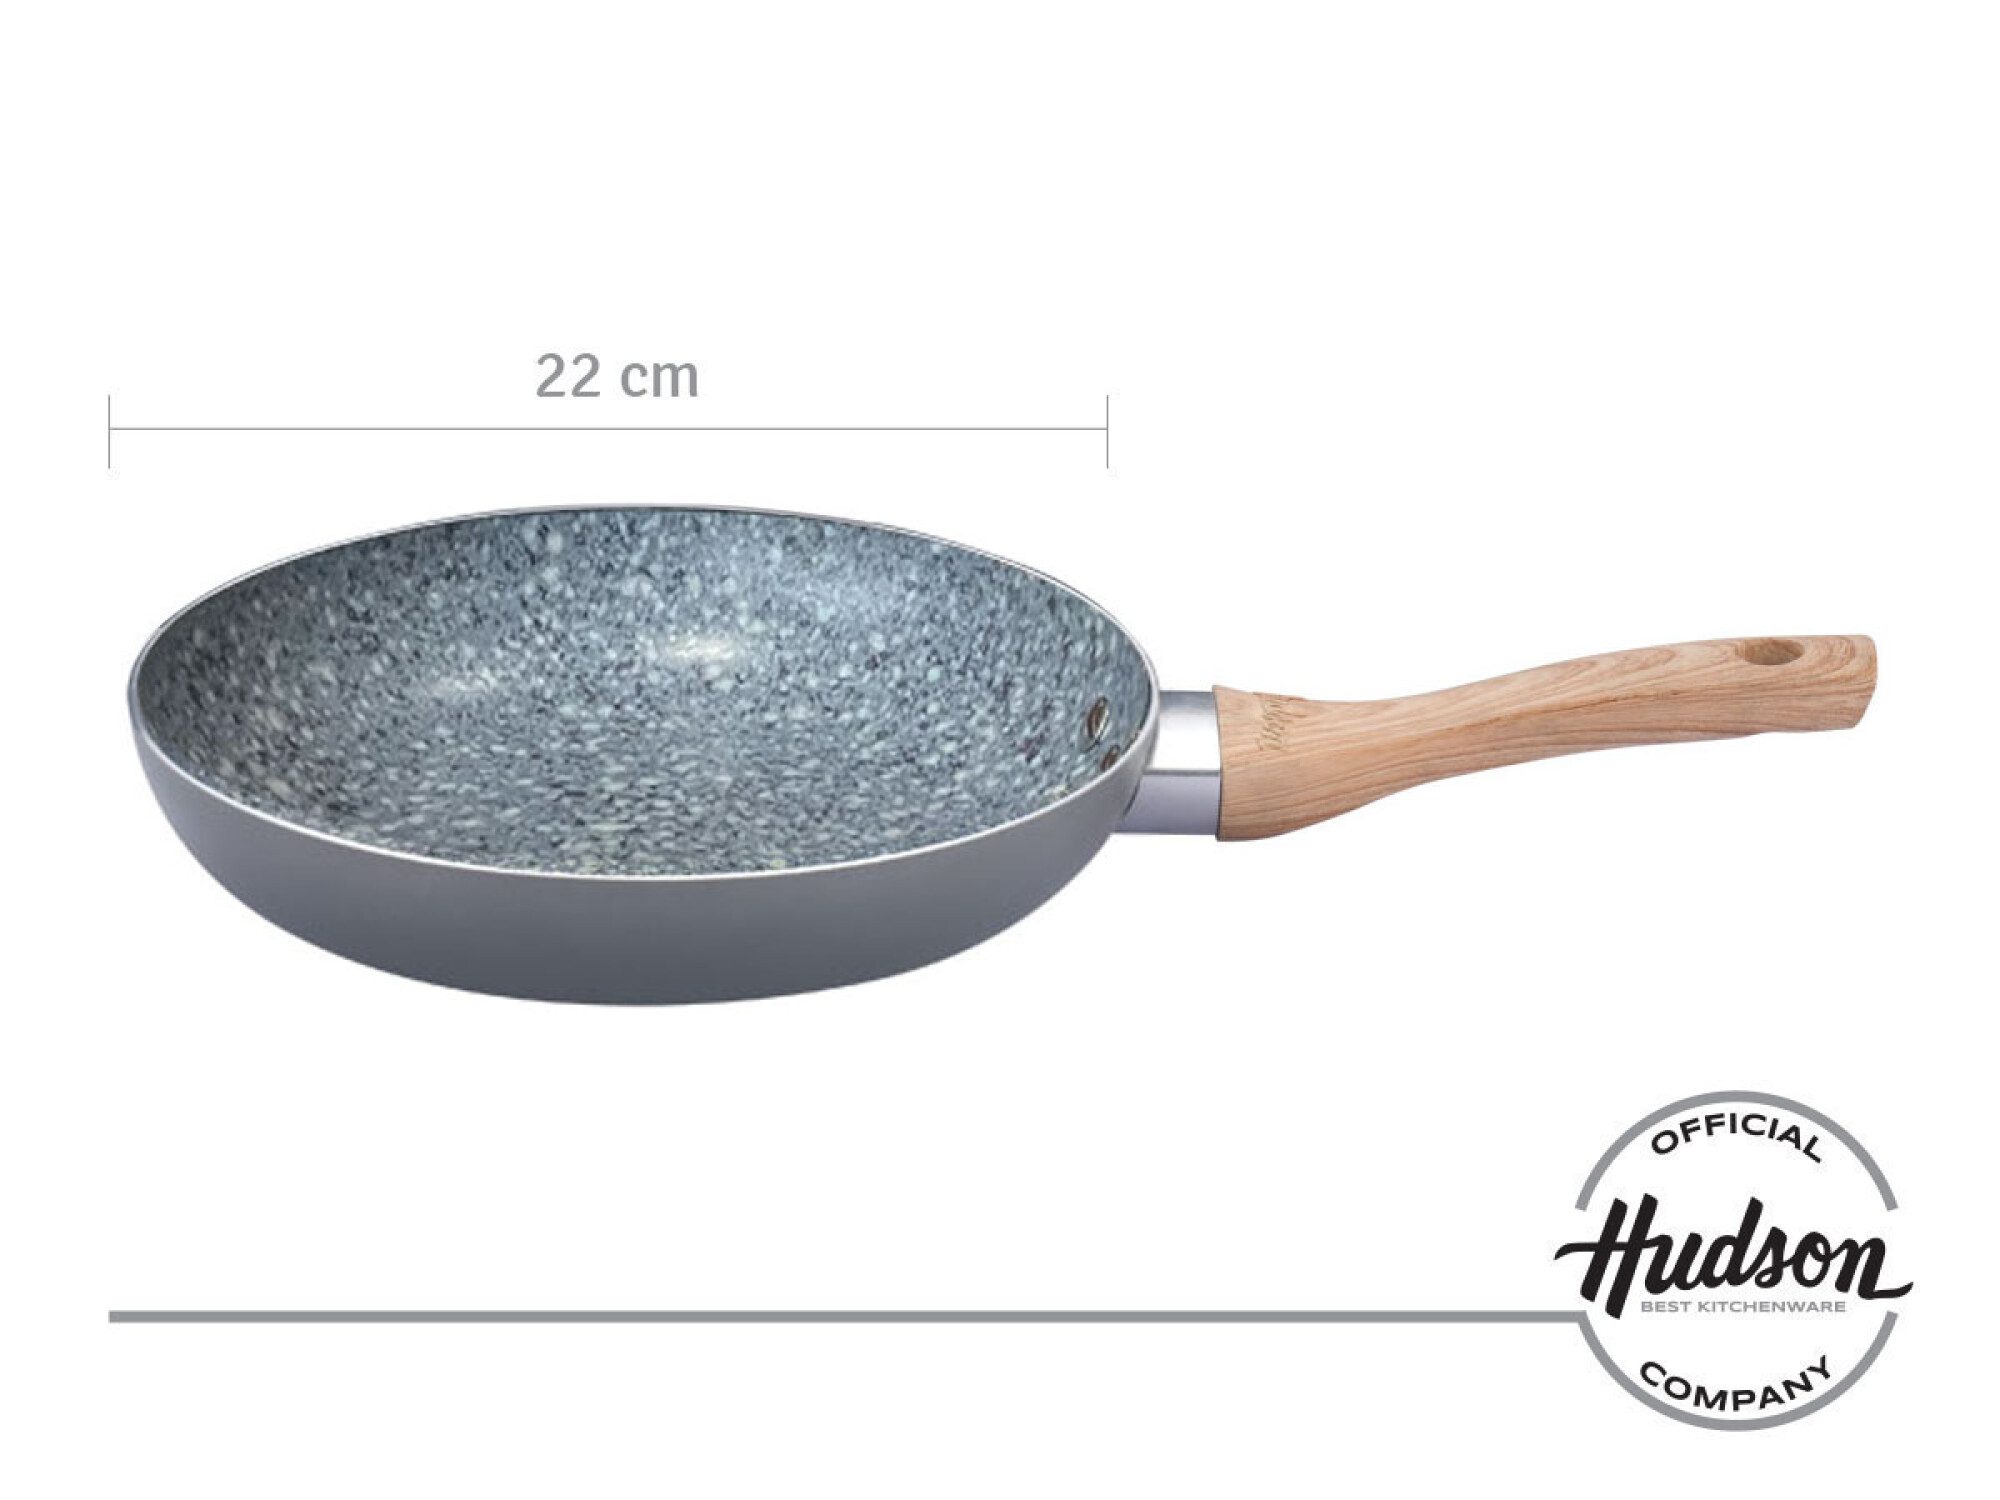 Sartén Cerámica Antiadherente Hudson Granito 22 Cm — Hudson Cocina